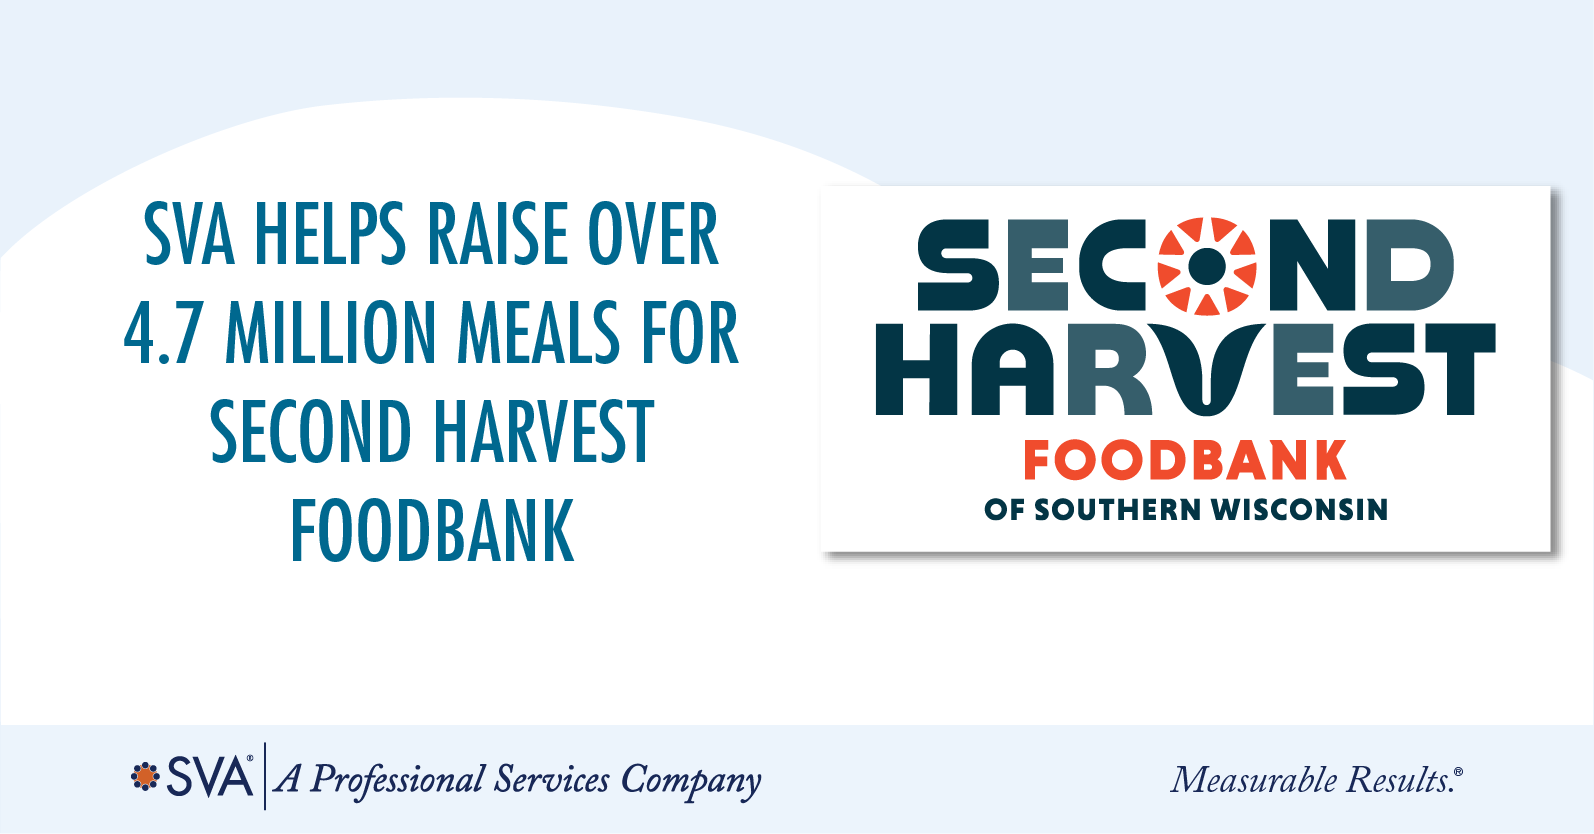 SVA-Helps-Raise-Over-4-Million-Meals-for-Second-Harvest-Foodbank